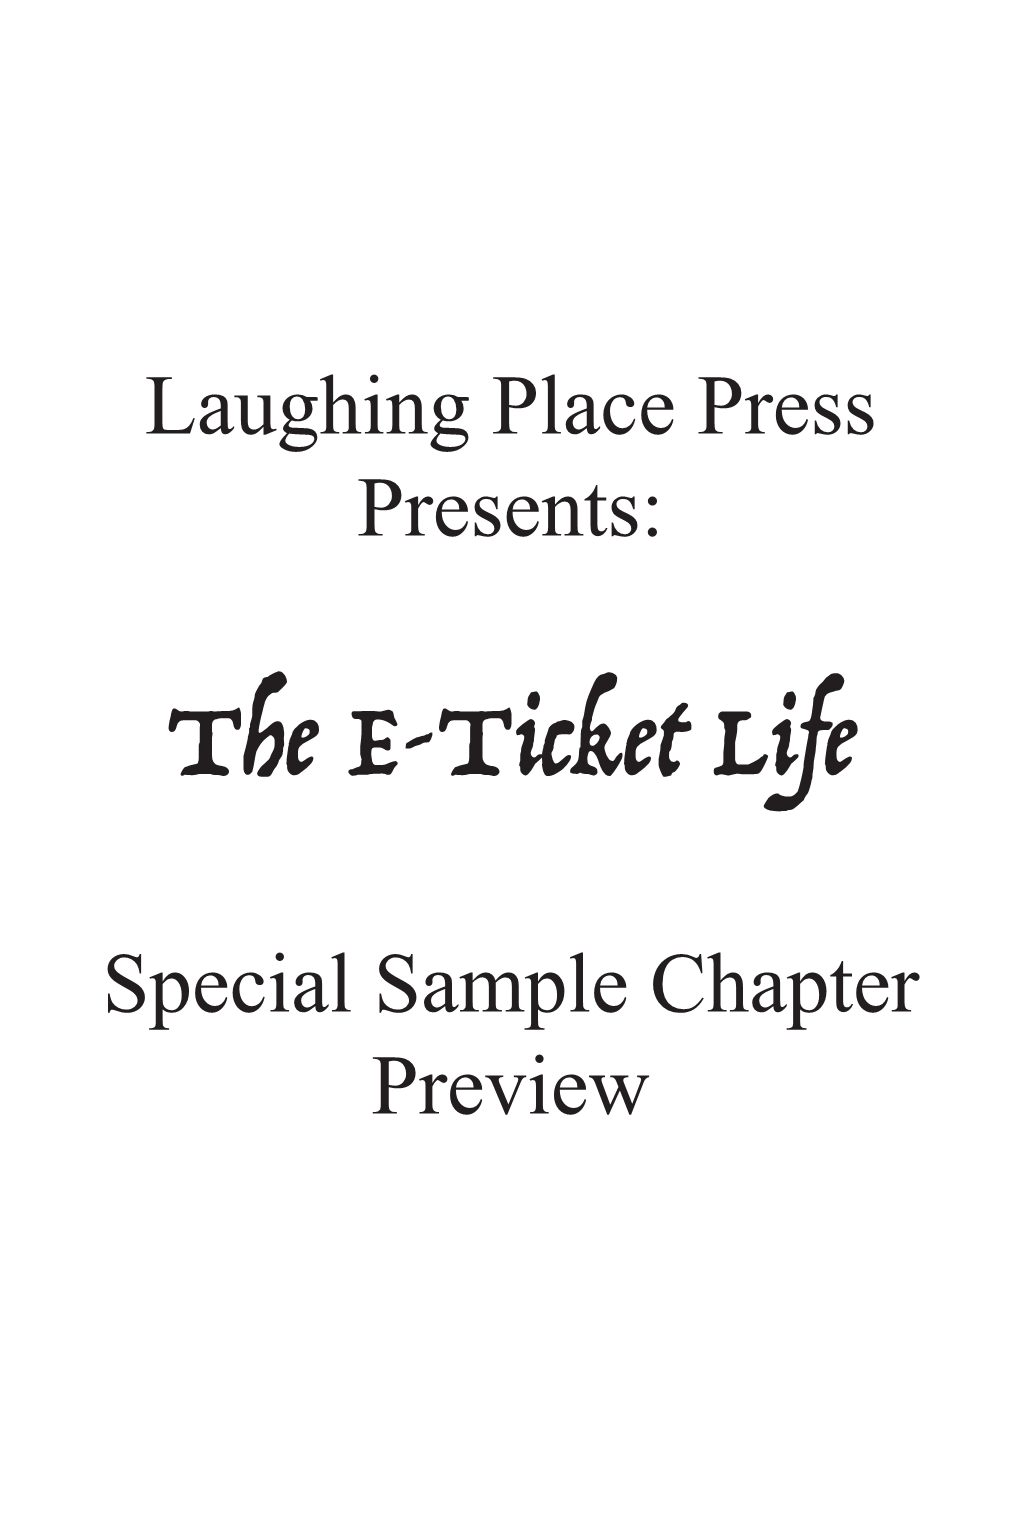 The E-Ticket Life